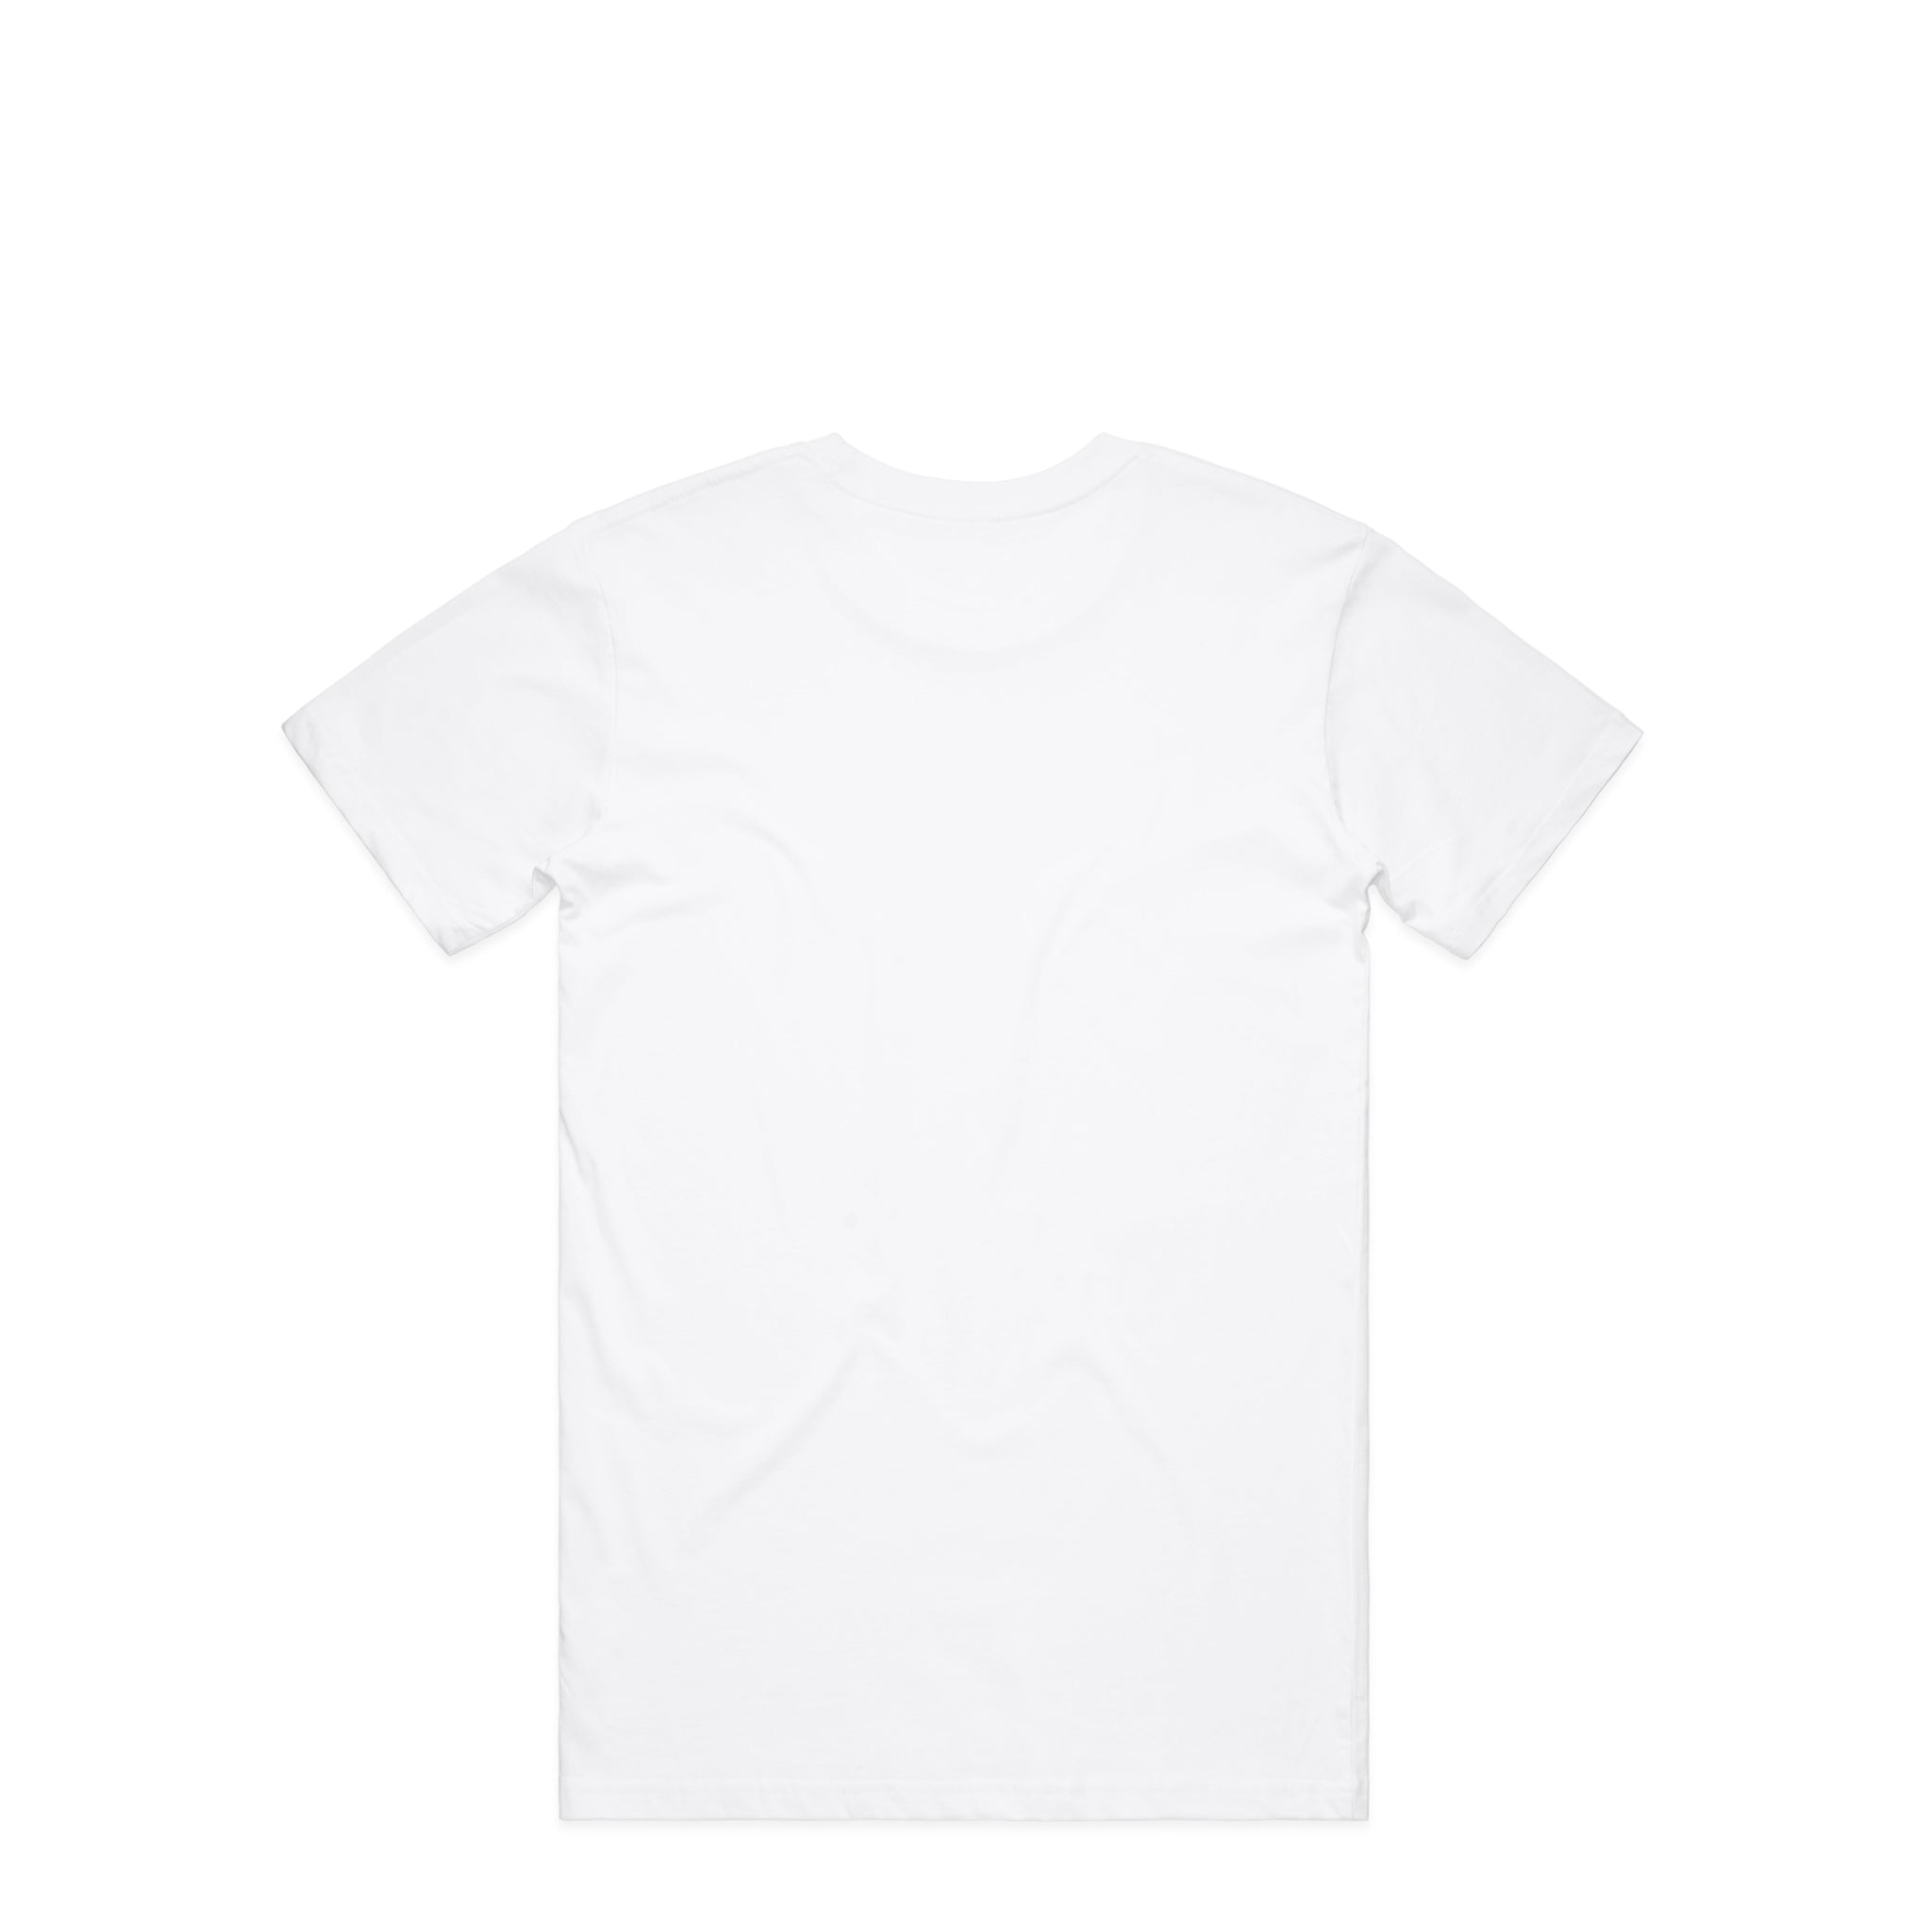 Rockstar Black Roundel T-Shirt – White